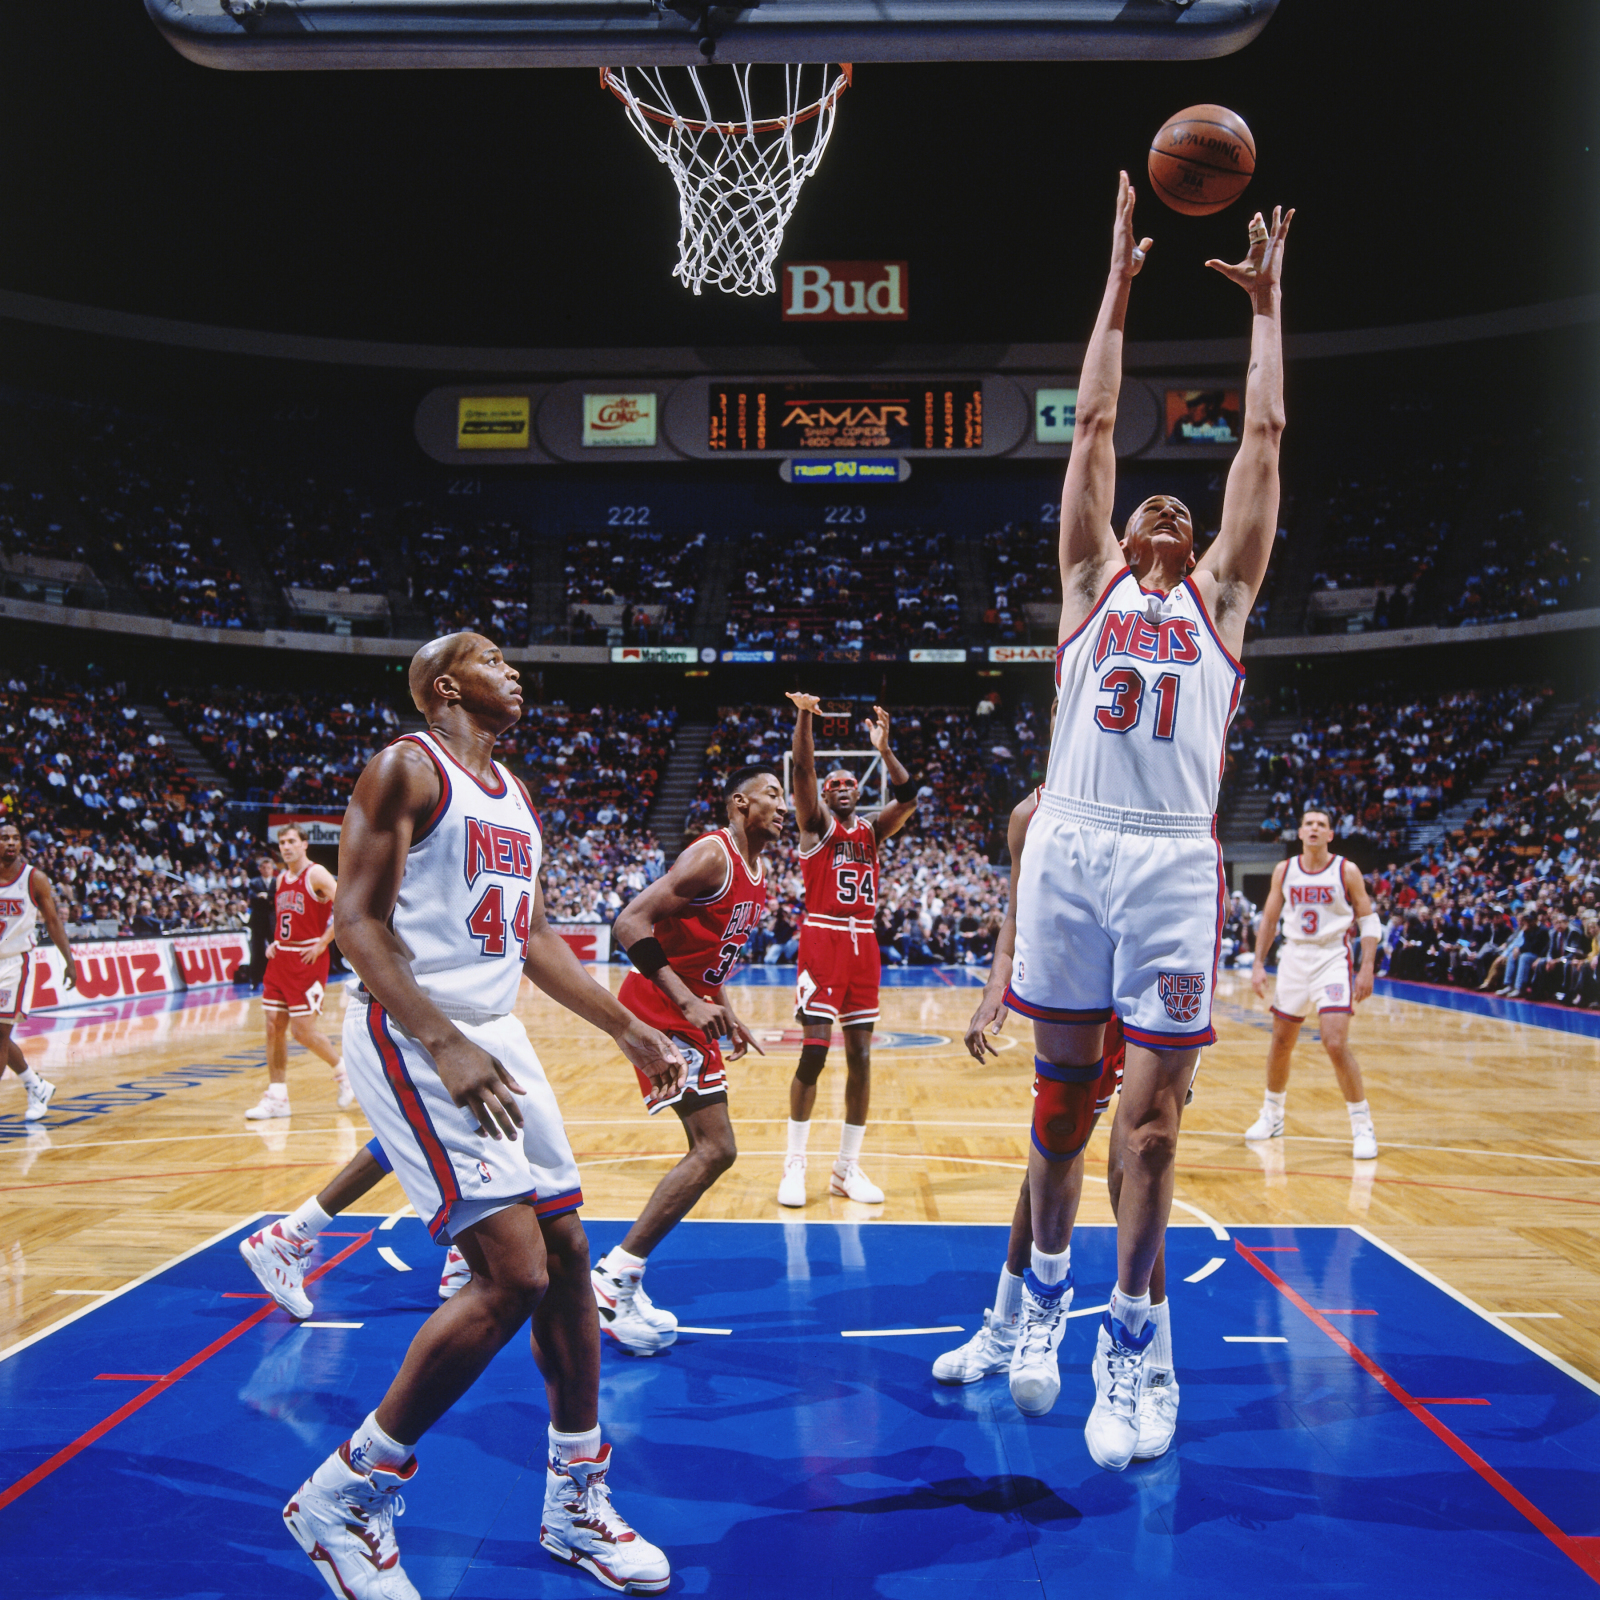 115 New Jersey Nets 1996-97  Brooklyn nets, Nba arenas, New jersey